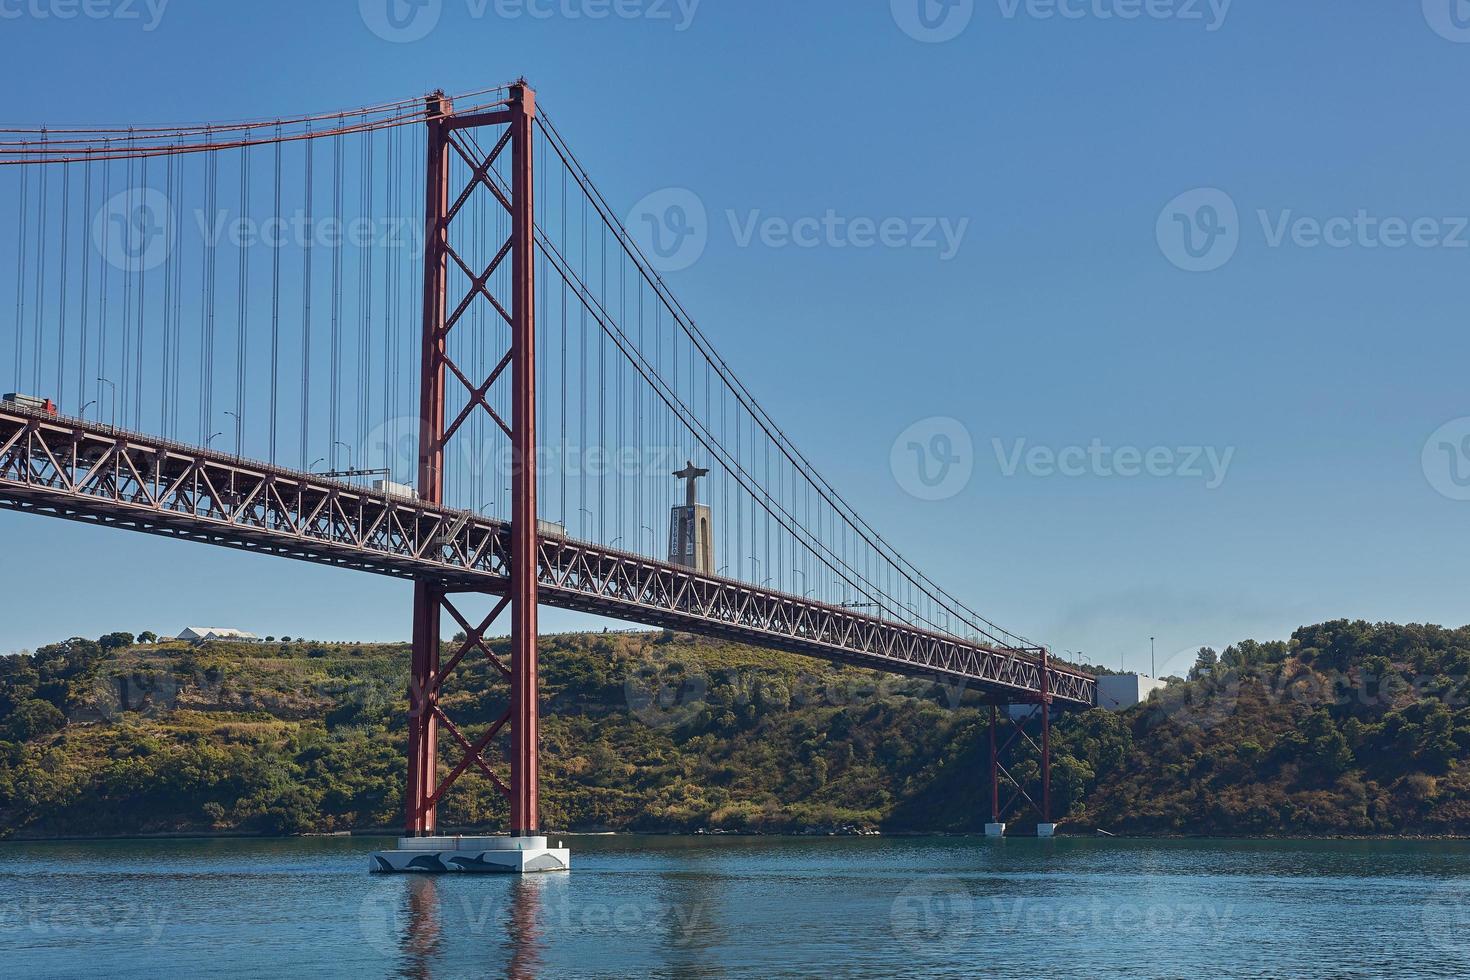 The 25 April bridge in Lisbon, Portugal photo